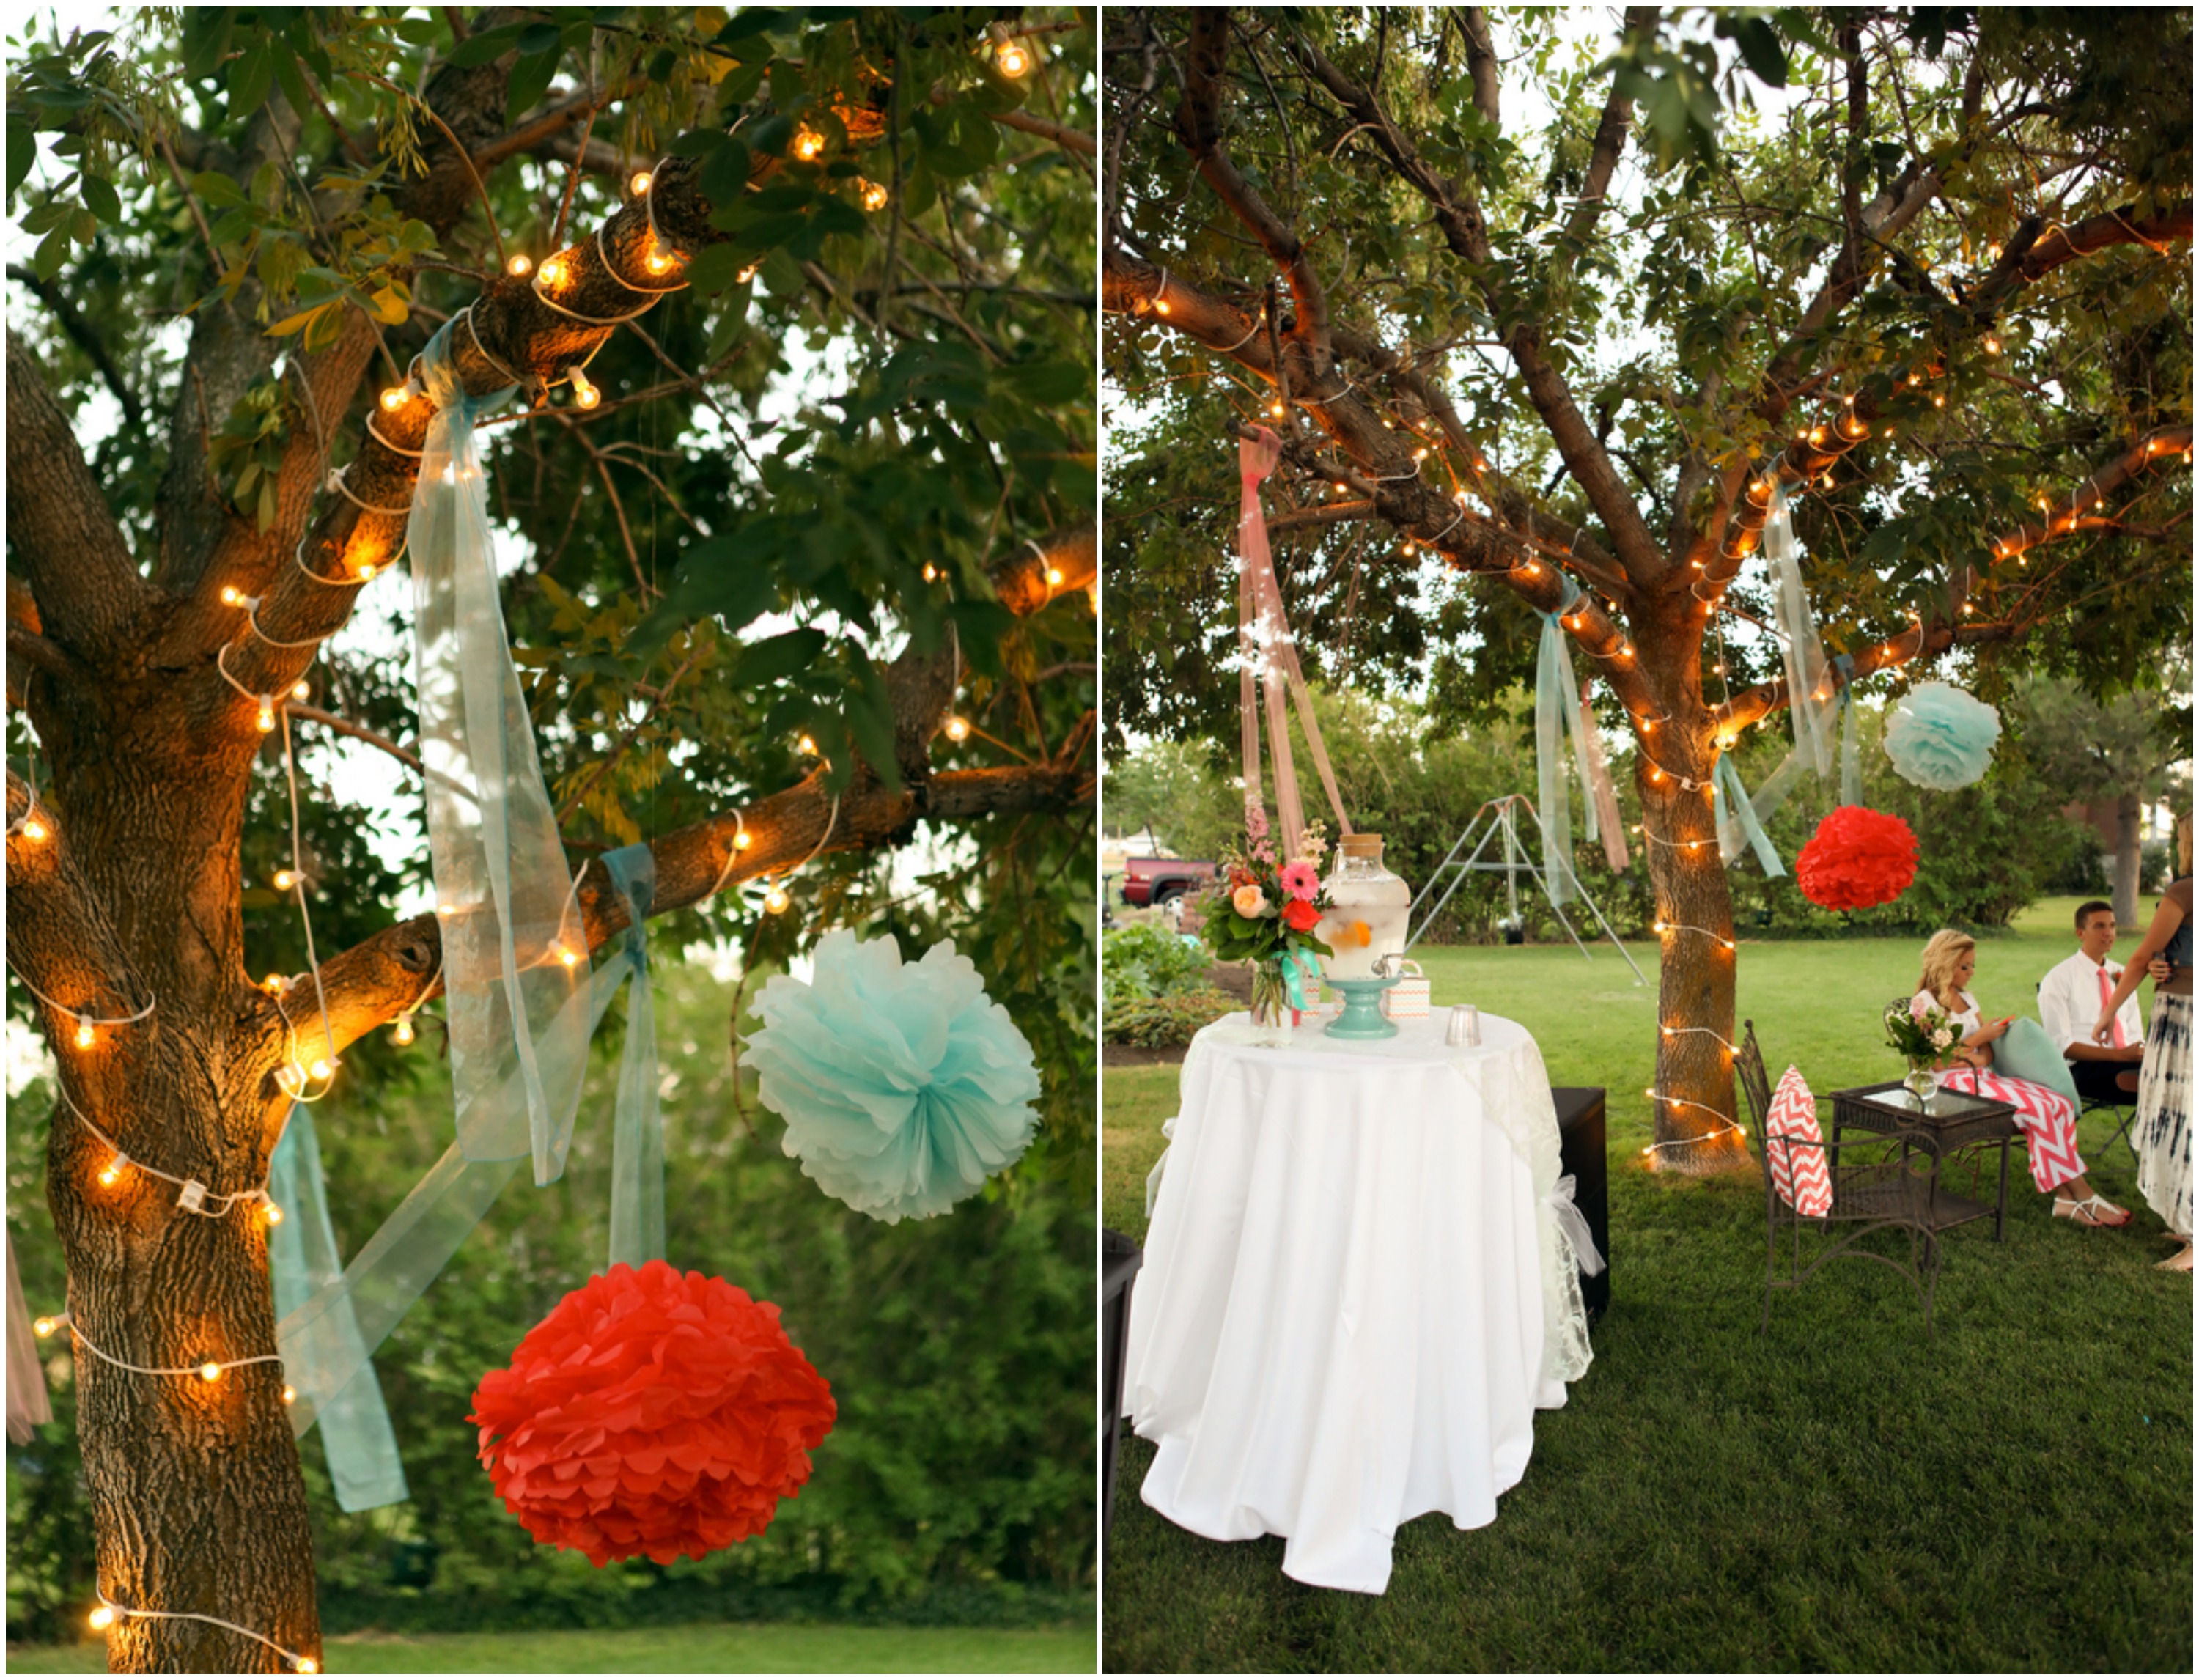 Bright and Colorful Backyard Wedding - Rustic Wedding Chic